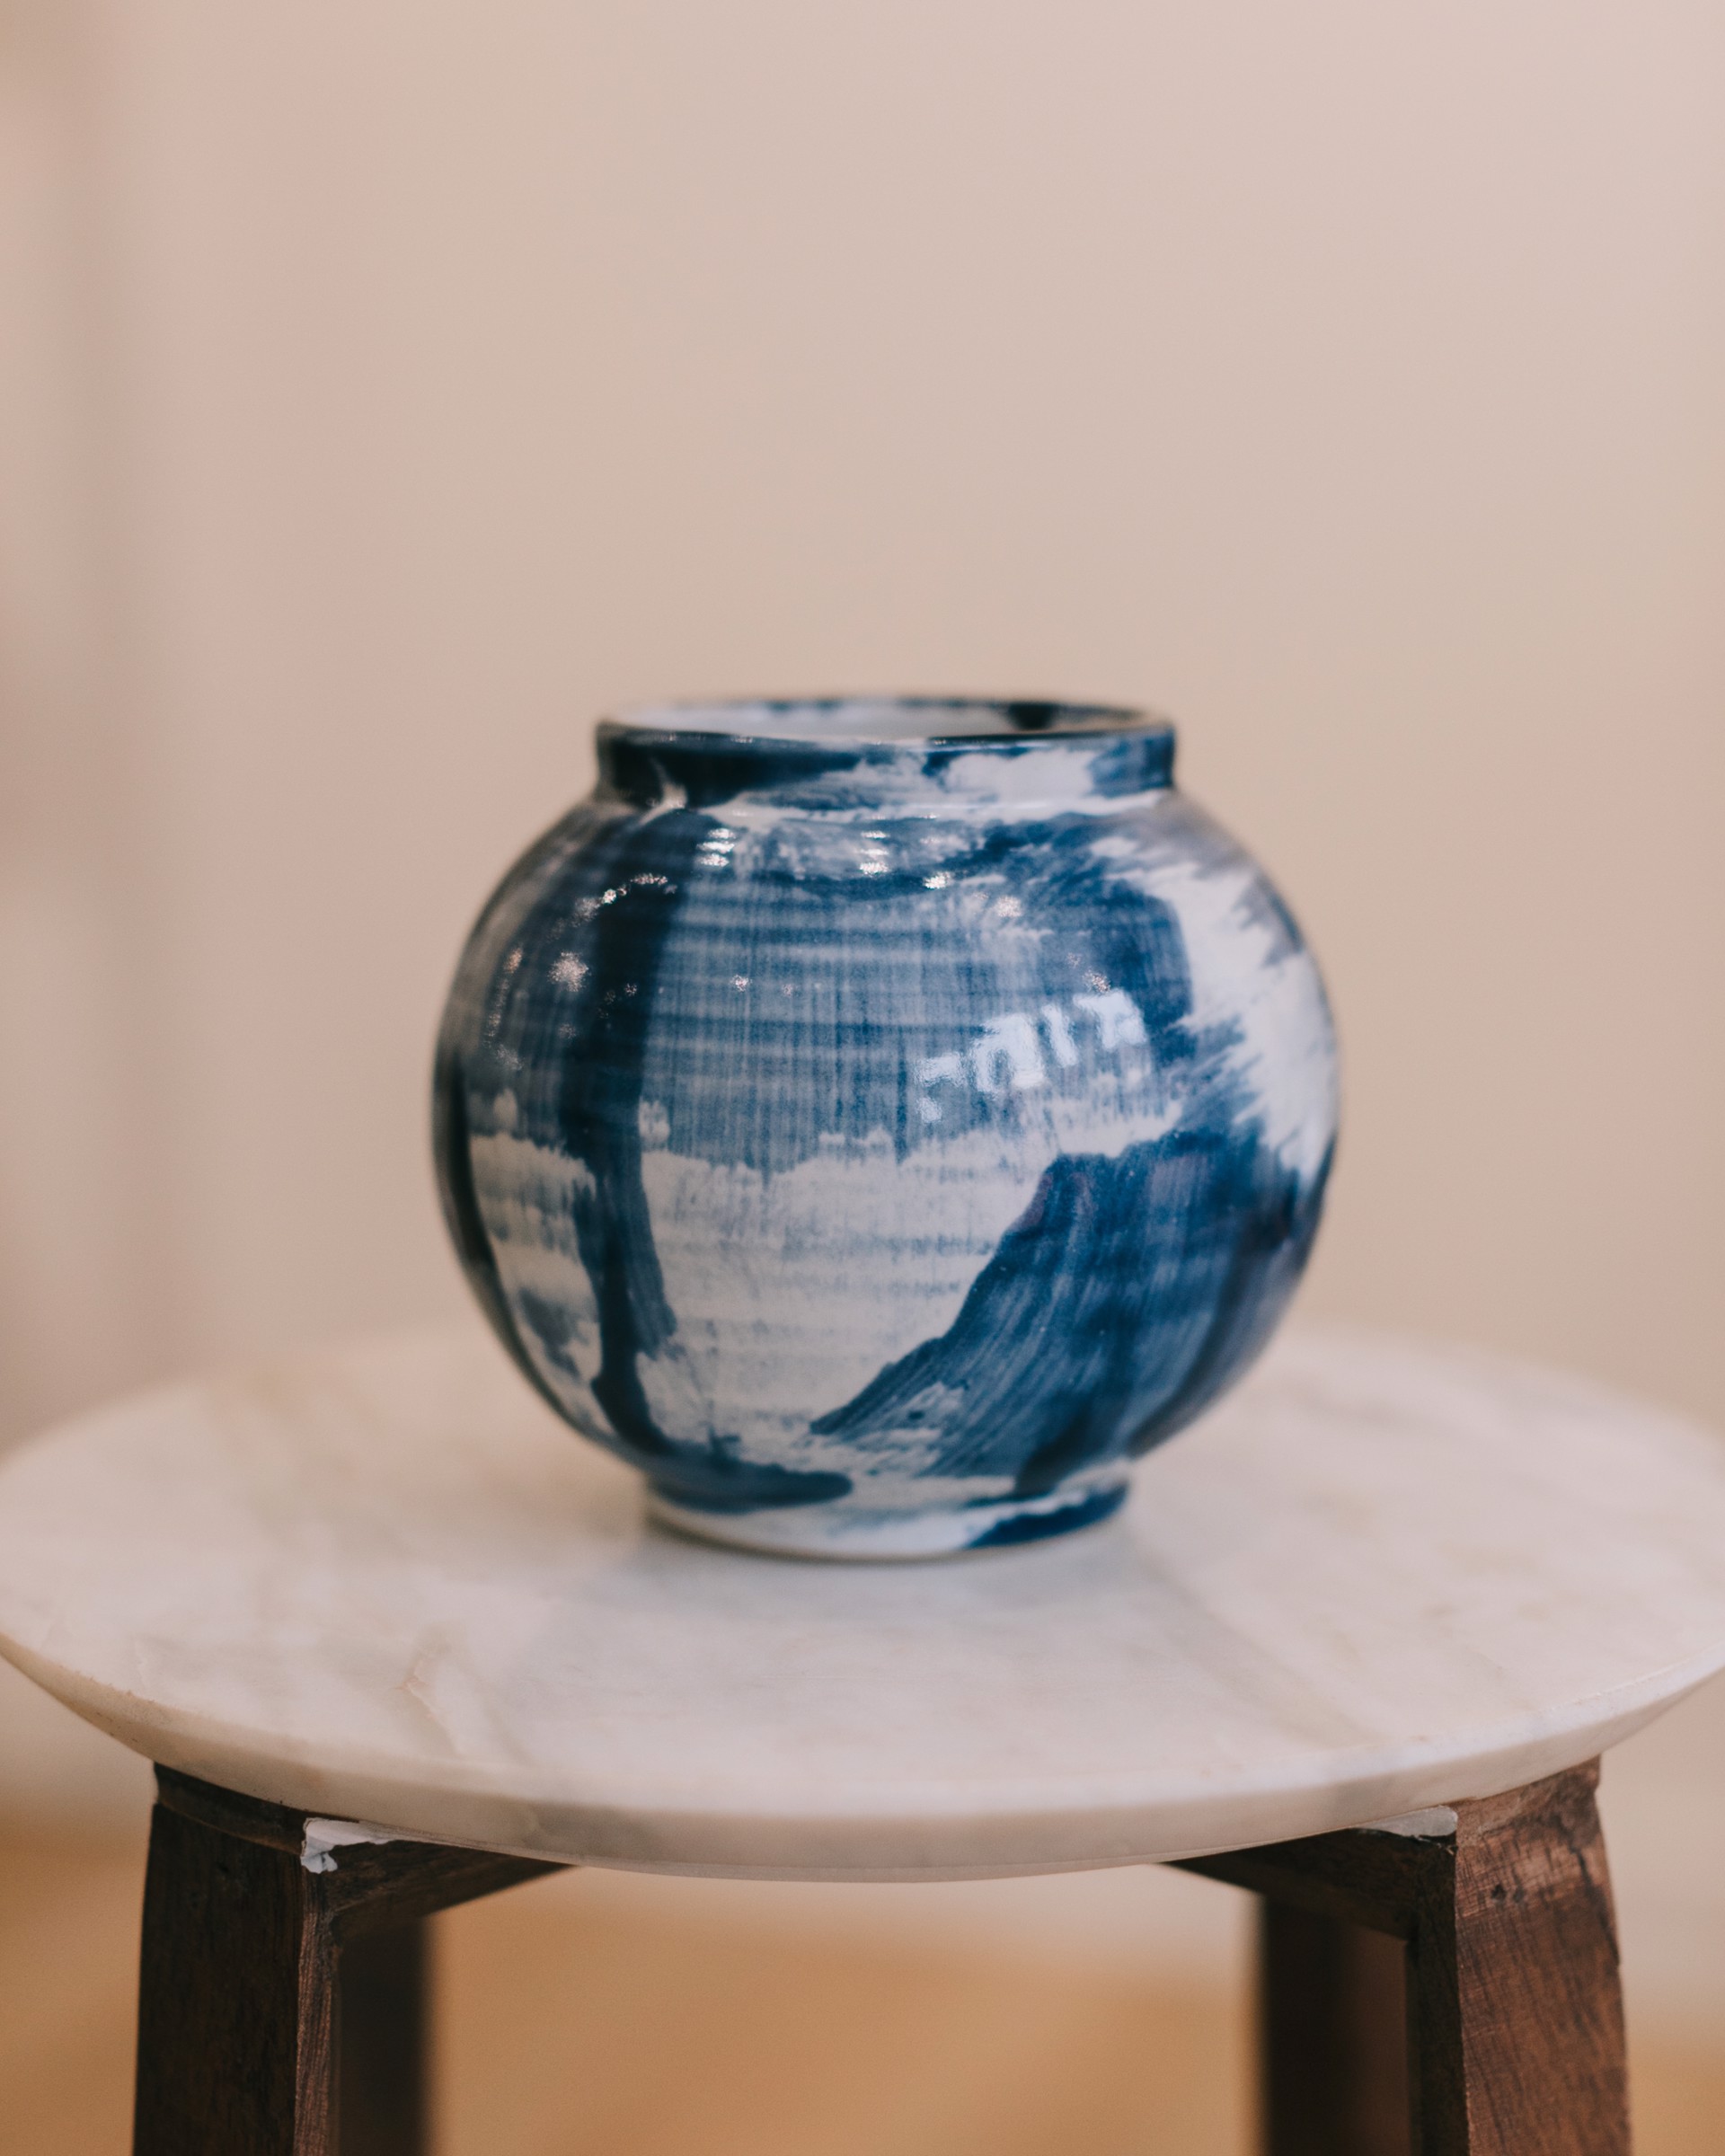 Small Brush Stroke Vase #1 by William Mantor